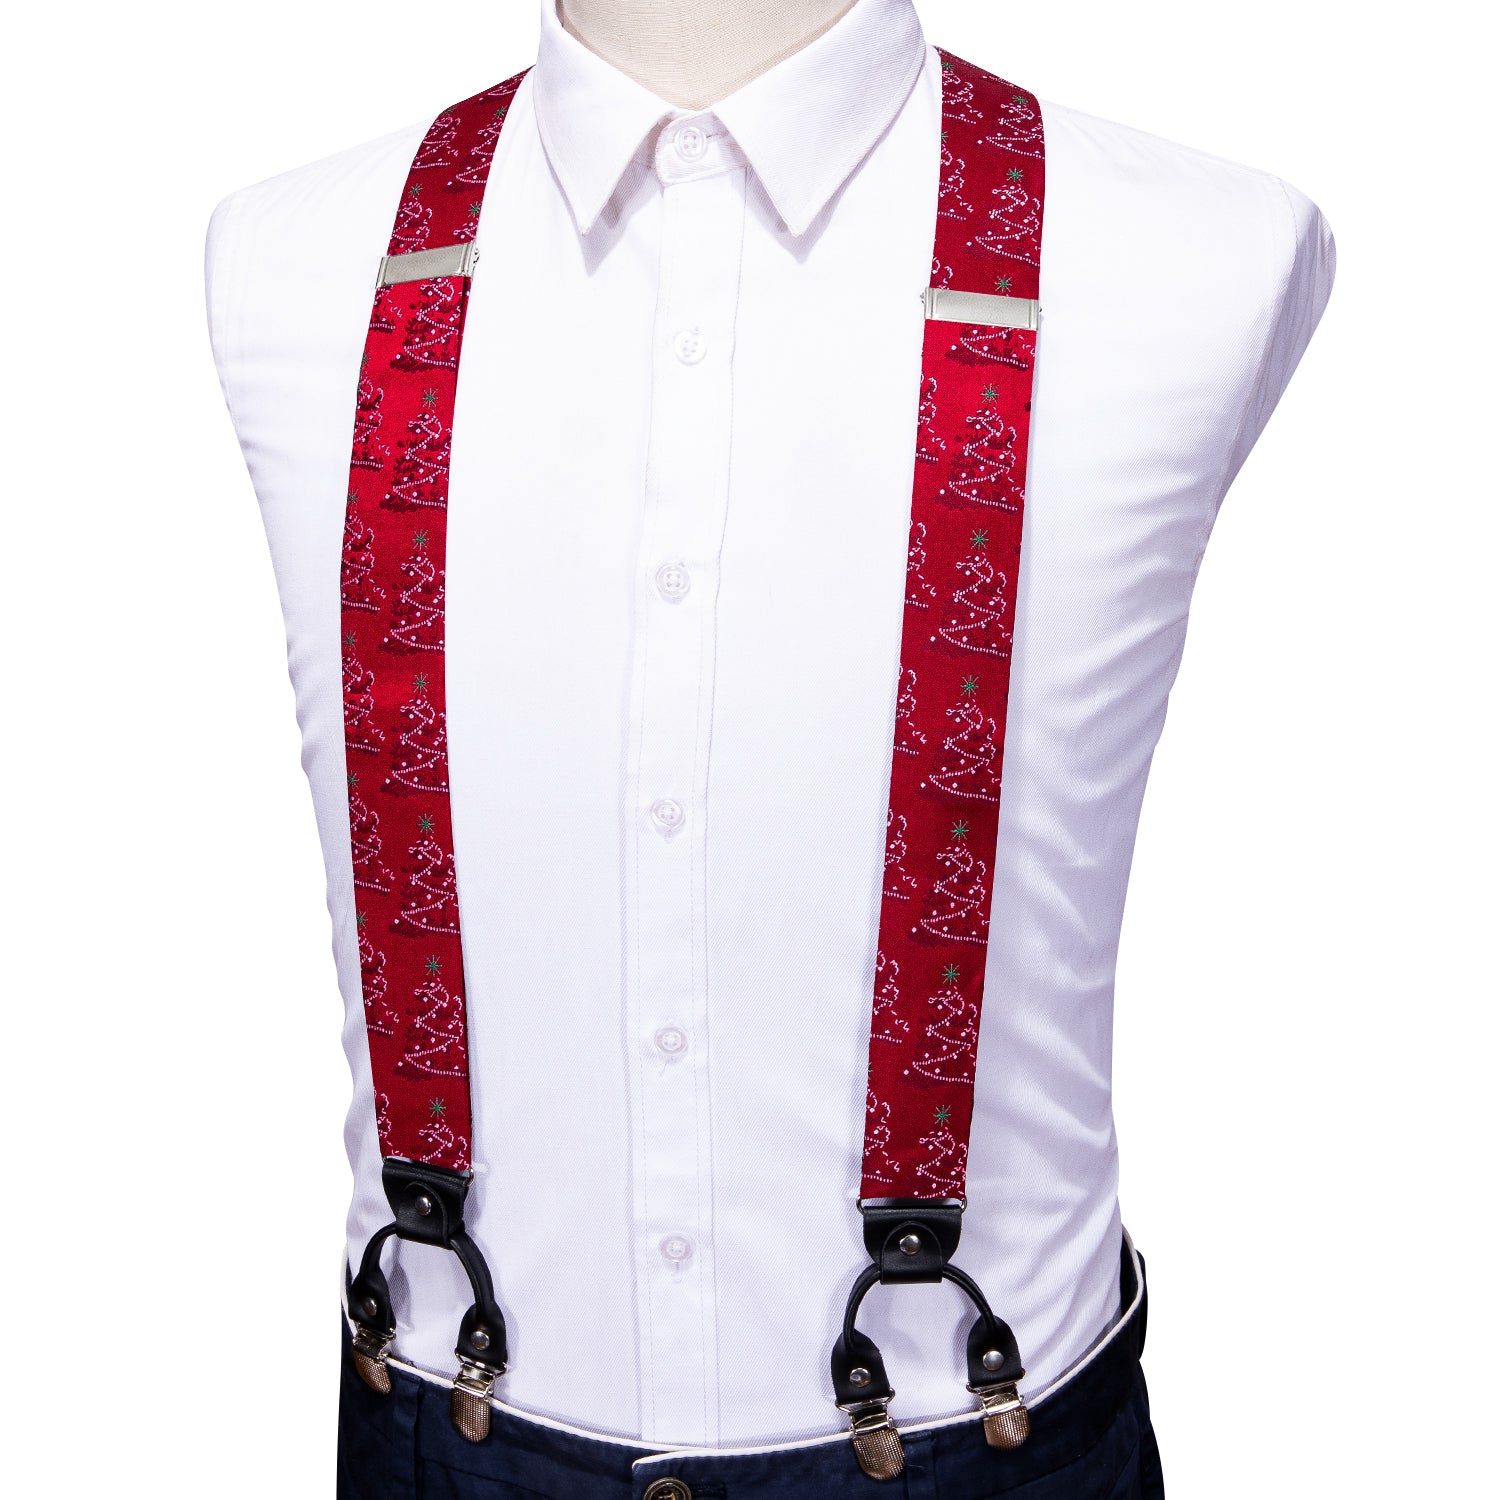 Christmas Red Tree Y Back Adjustable Bow Tie Suspenders Set